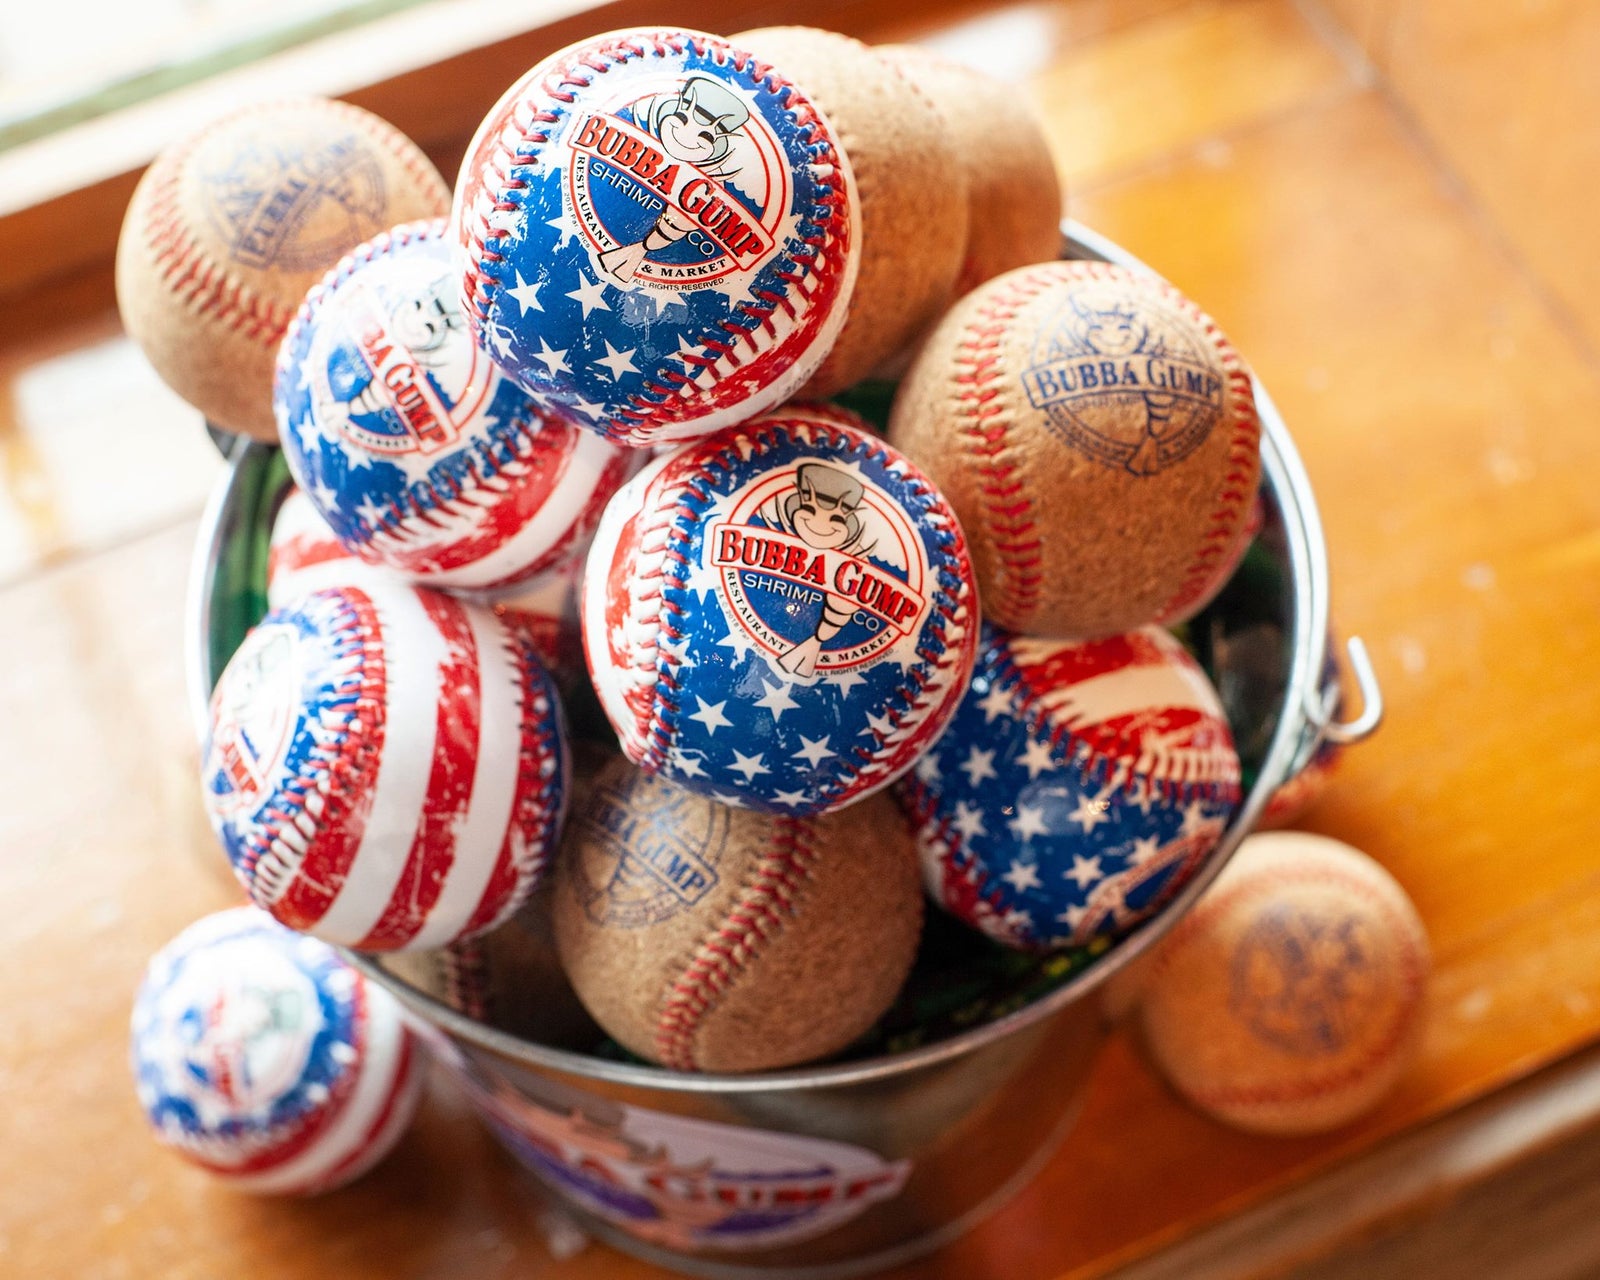 Cork baseballs with Blue Bubba Gump Logo, and American Flag print baseballs with Bubba Gump logo in a tin.